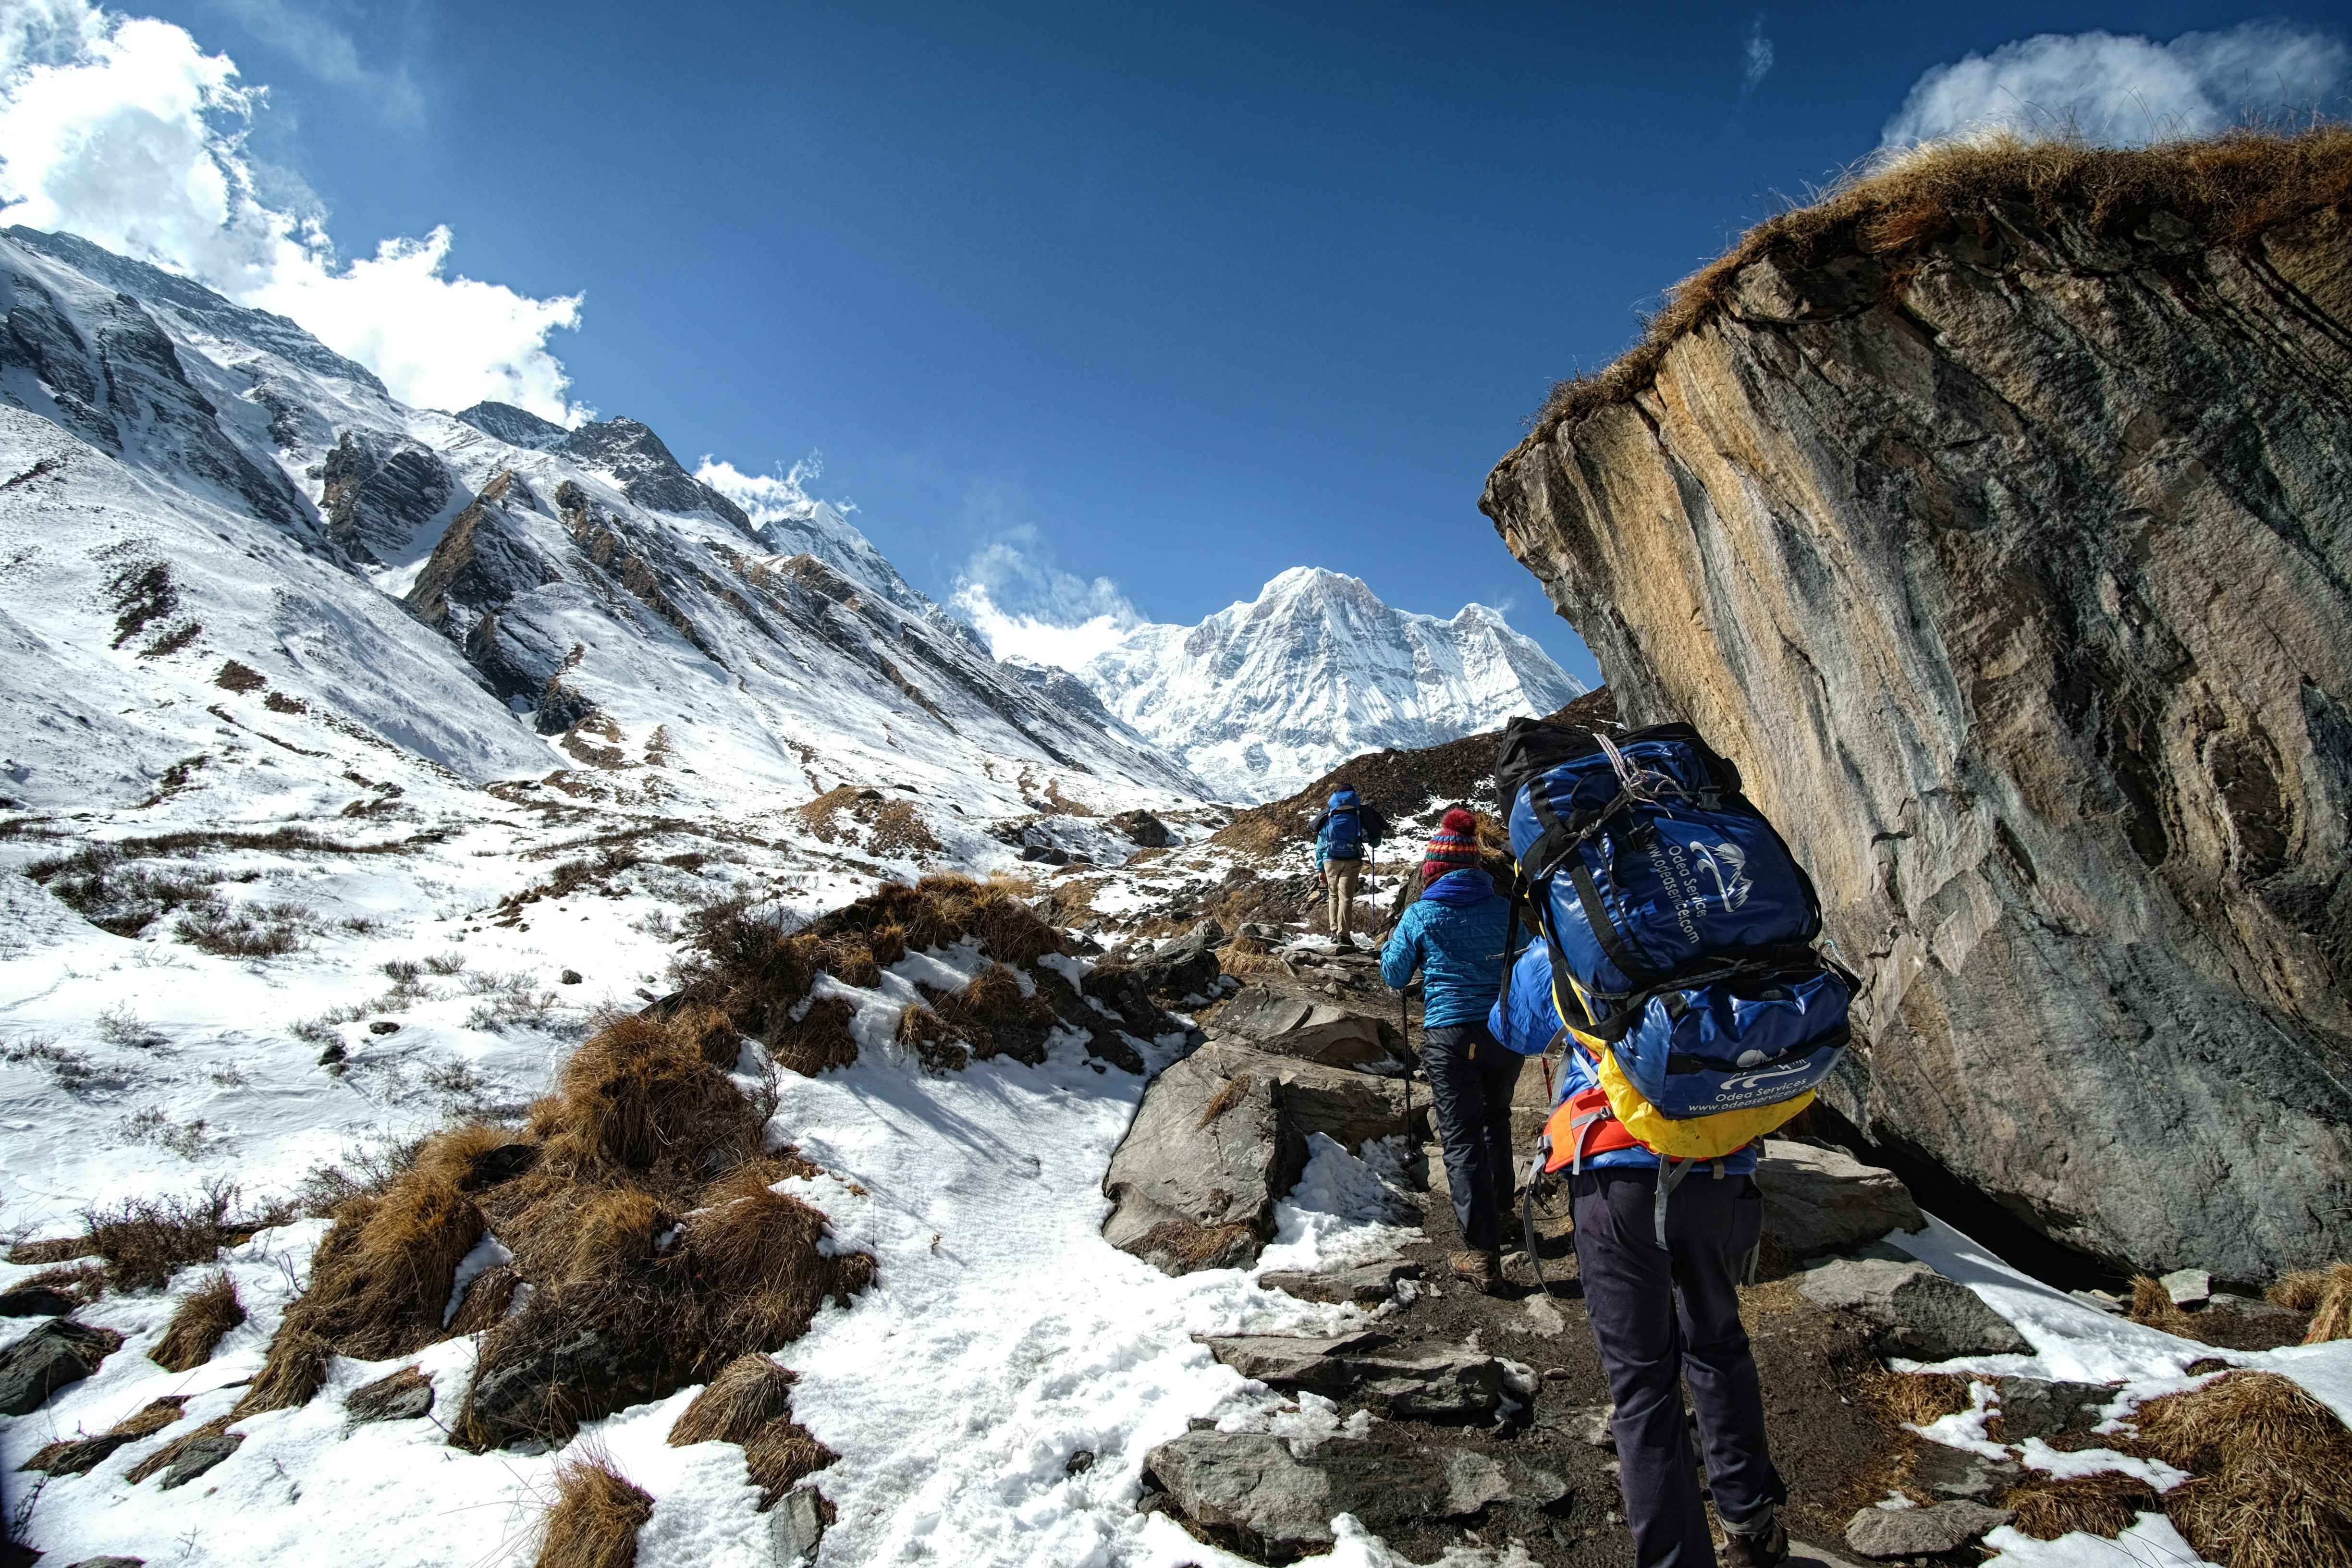 Trekking destinations in Nepal